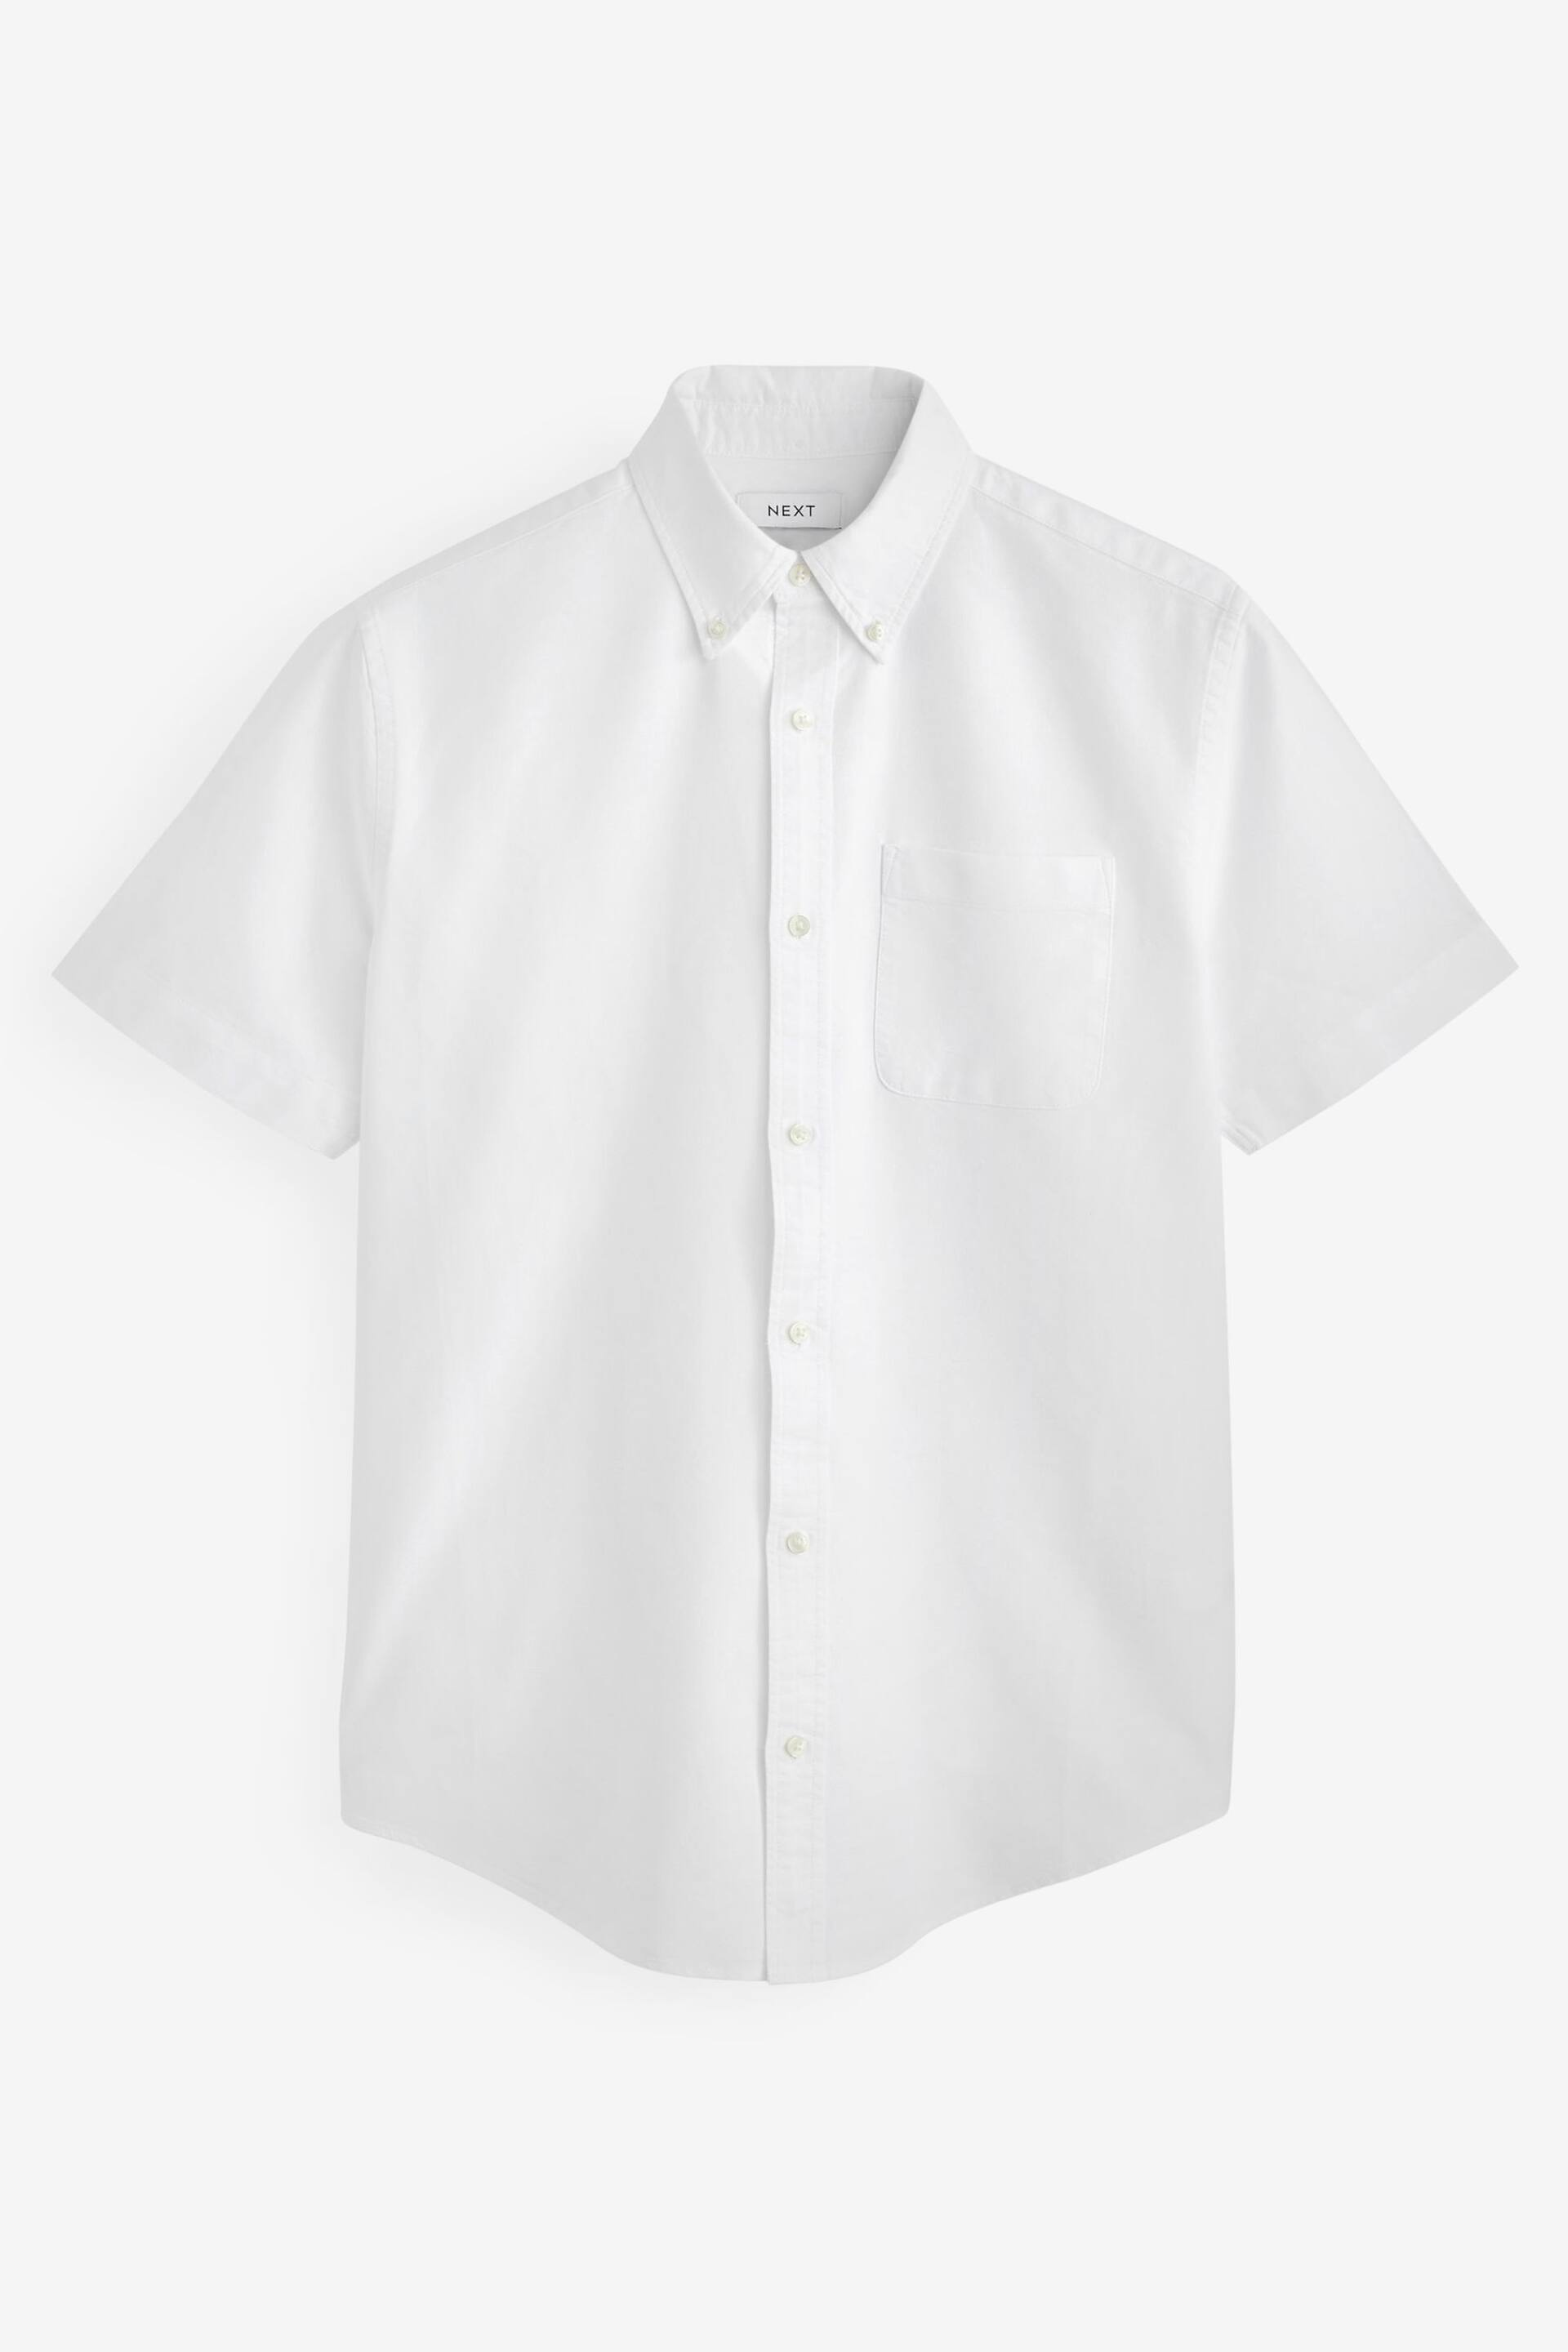 White/Blue/Navy 3 Pack Short Sleeve Oxford Shirt 3 Pack - Image 3 of 10